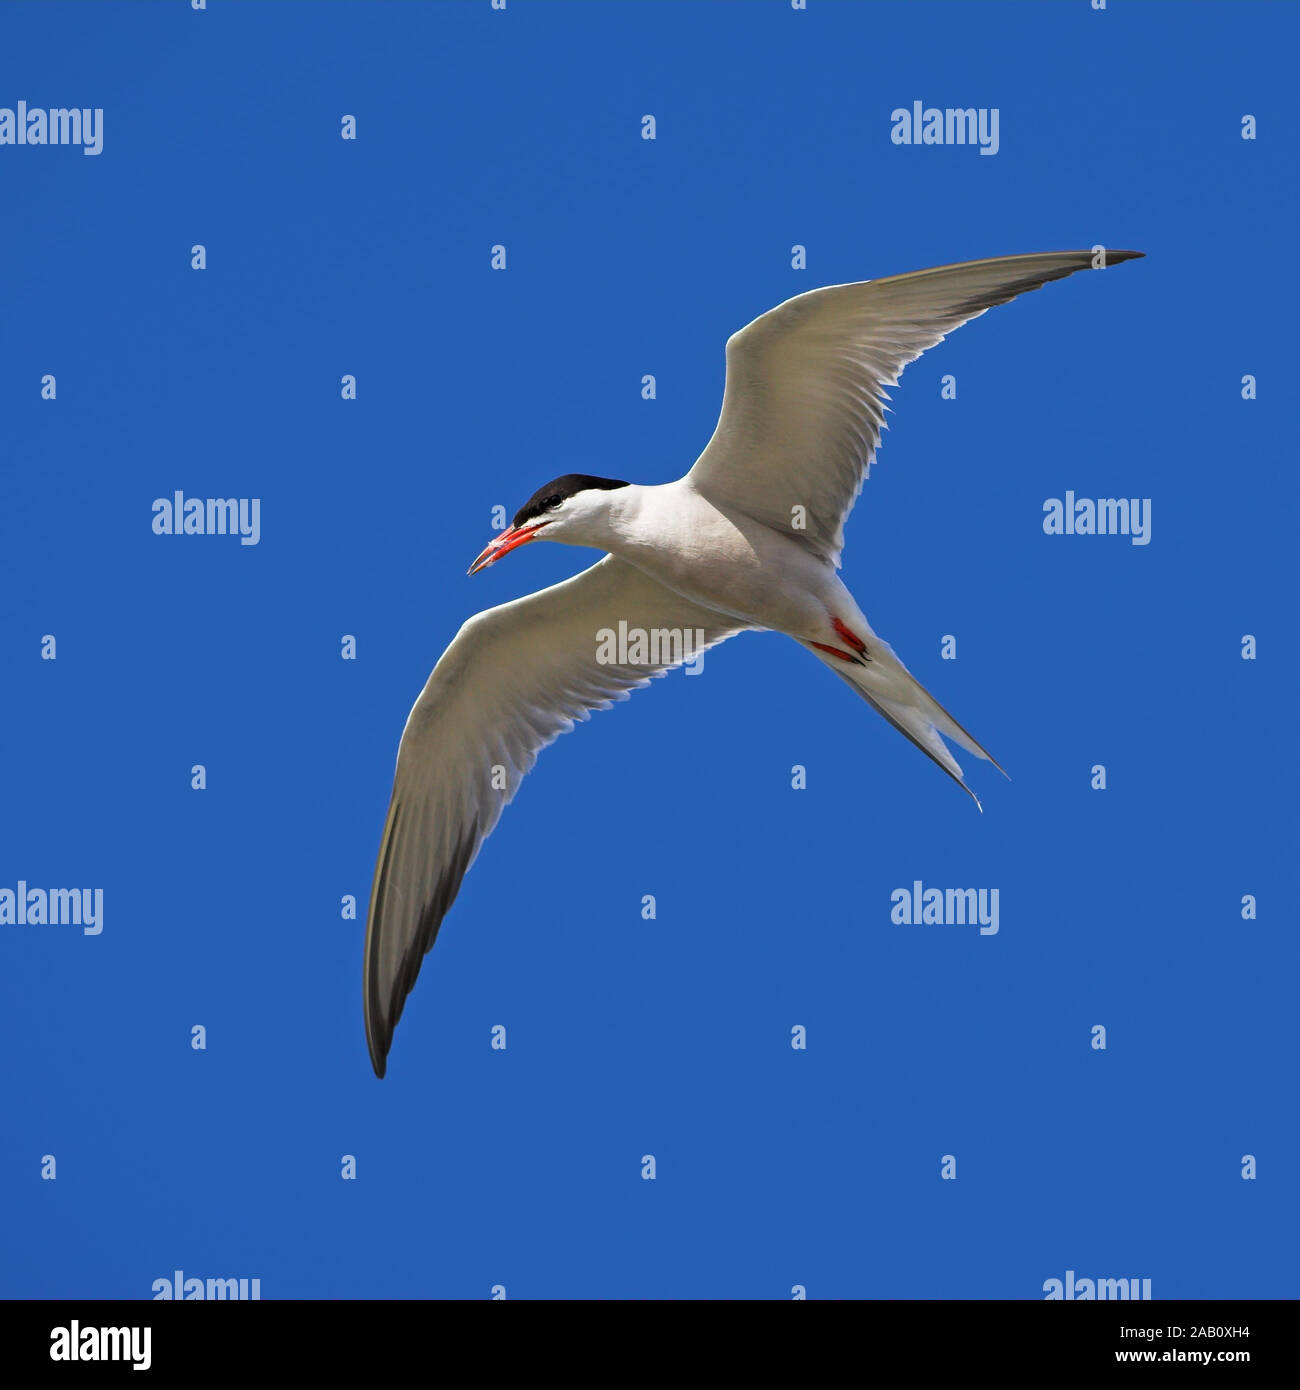 Flussseeschwalbe Fluss-Seeschwalbe Flußseeschwalbe Common Tern Sterna hirundo Sterne pierregarin Charrán Común Stock Photo